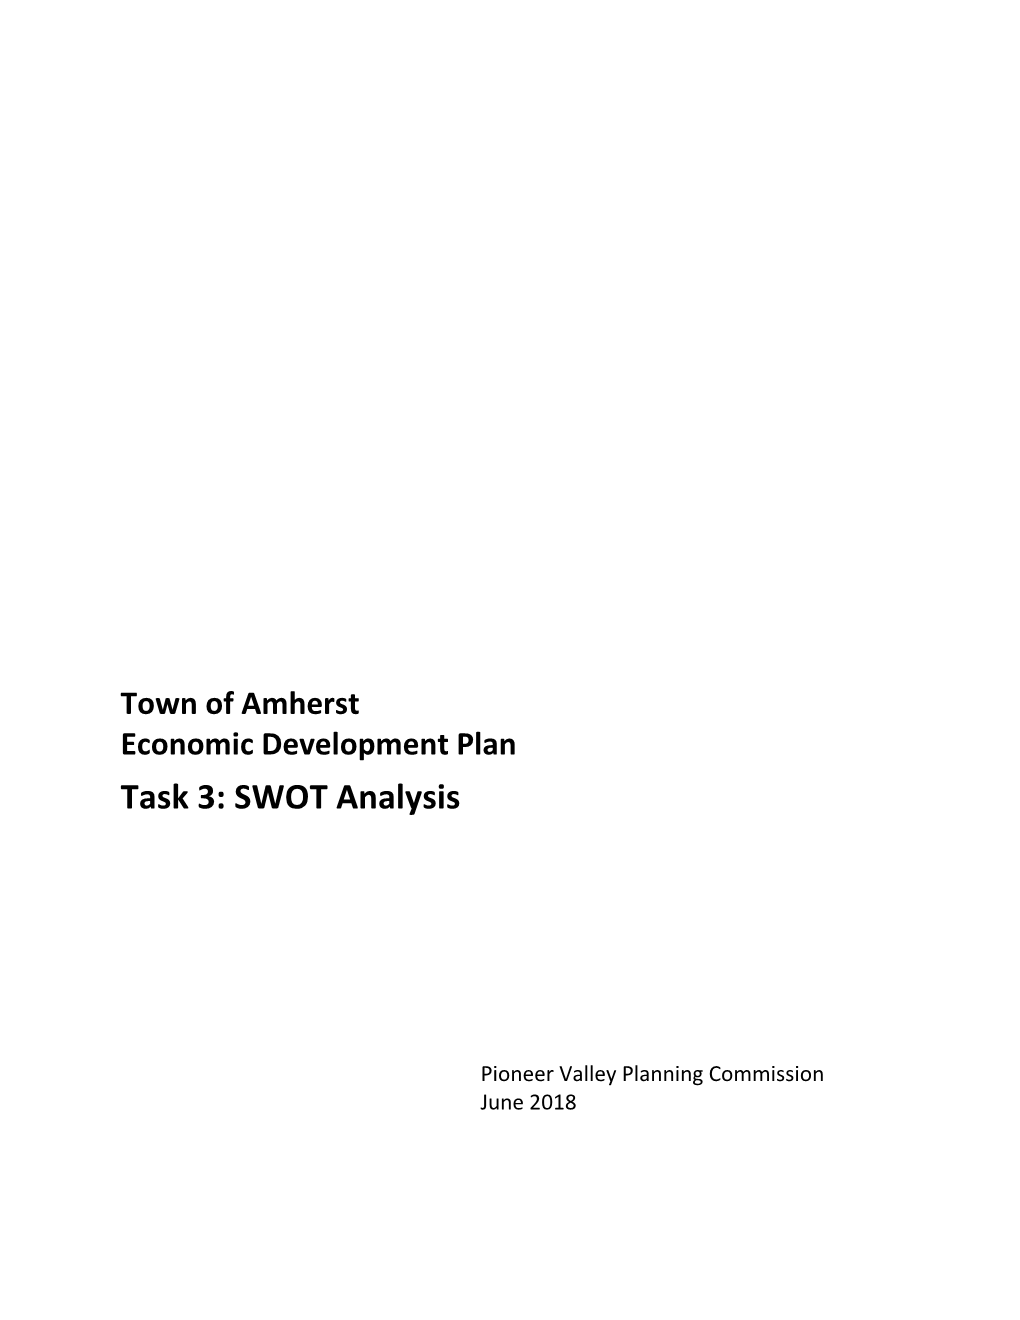 Town of Amherst Economic Development Plan Task 3: SWOT Analysis